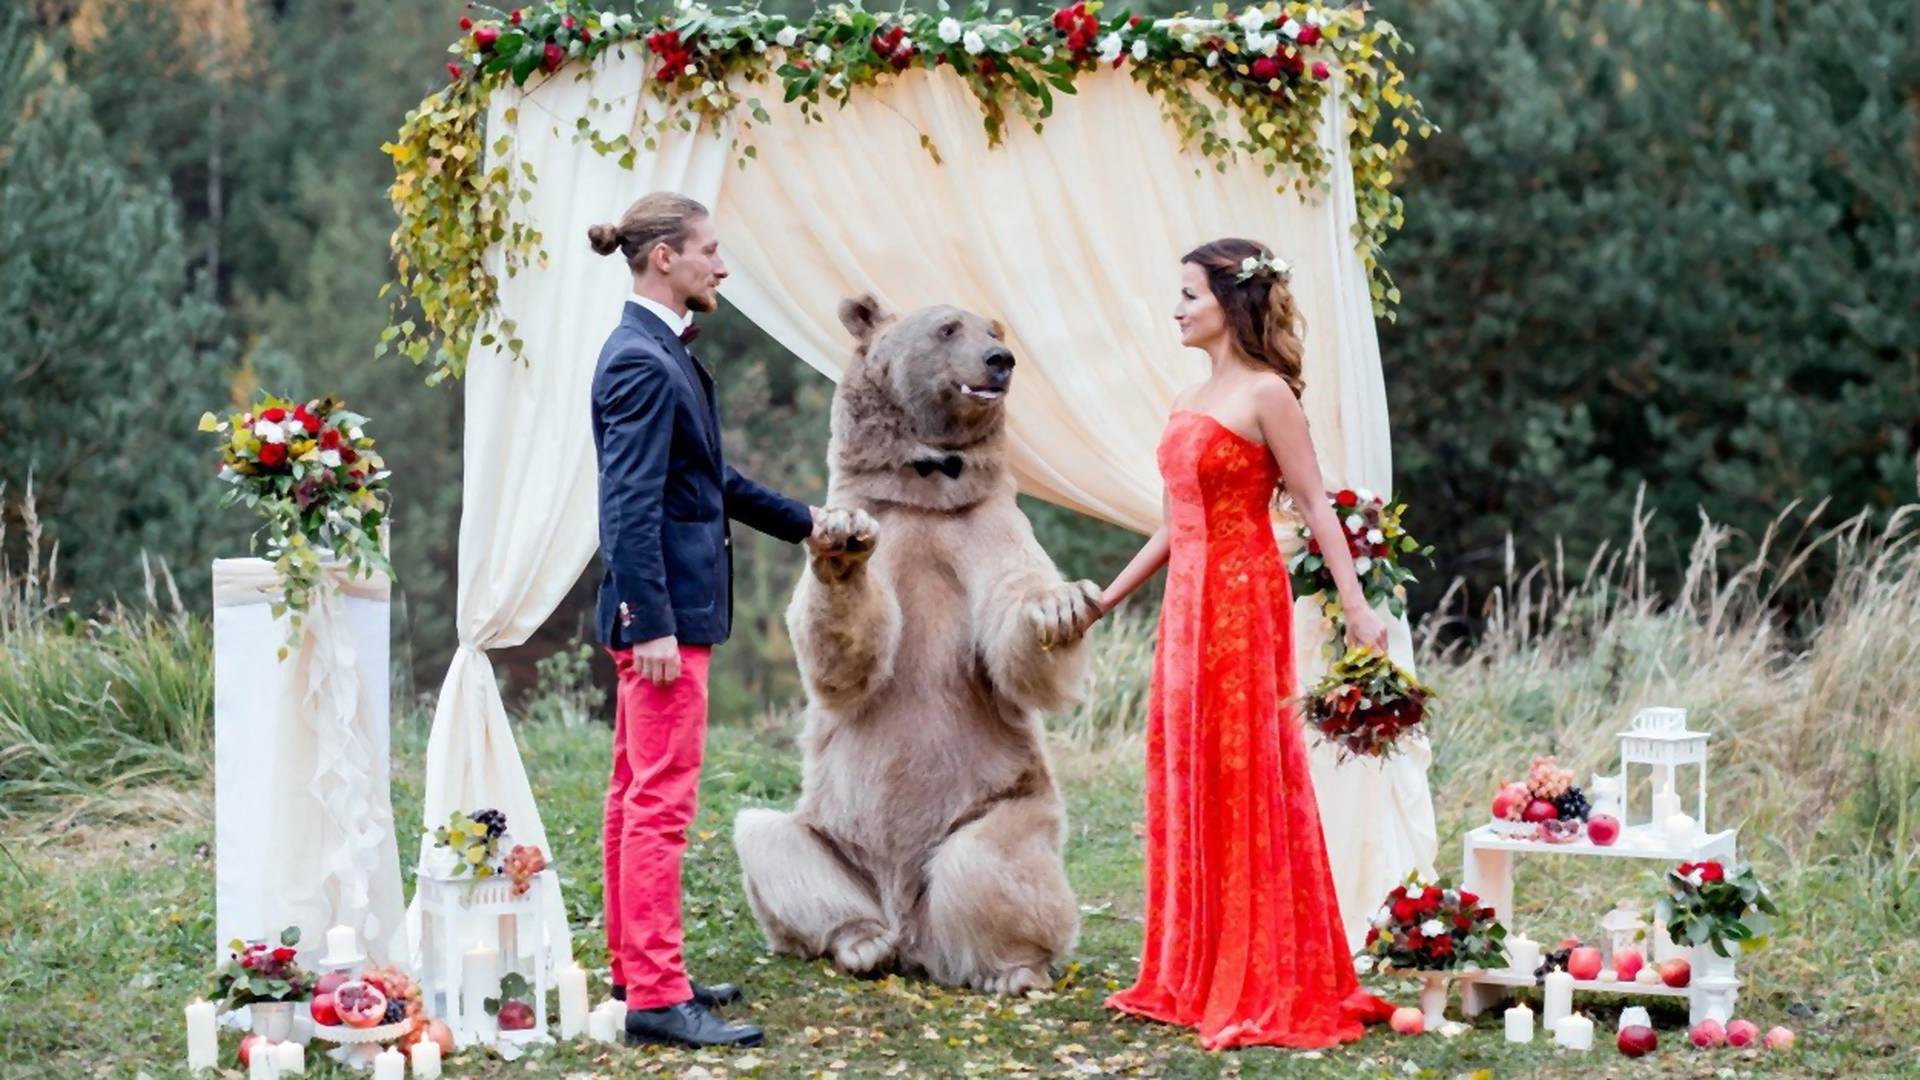 Fotografije medveda koji venčava par iz Rusije nisu ni slatke ni smešne